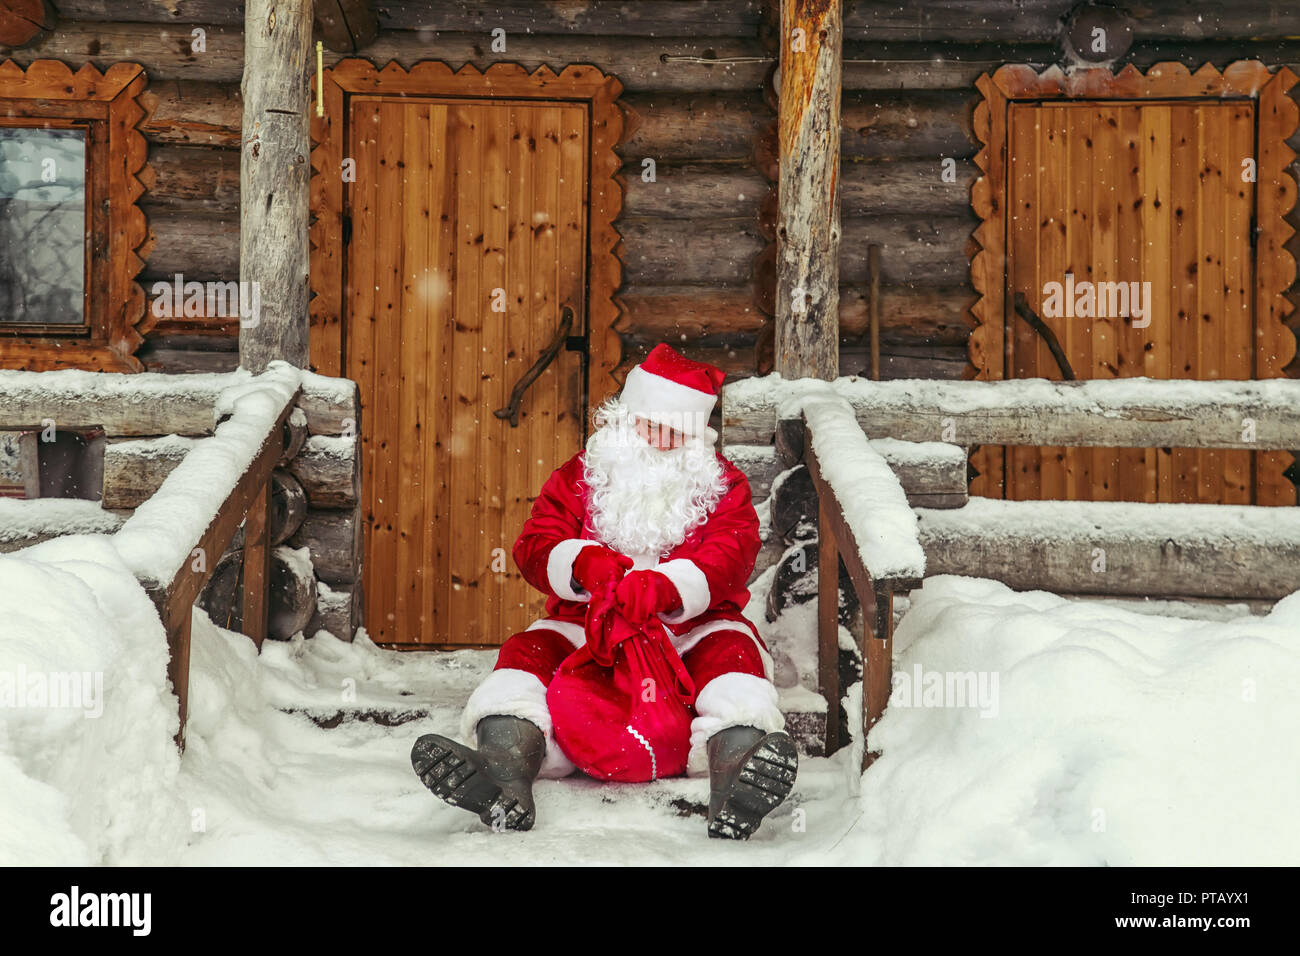 The daily life of Santa Claus. Home of Santa Claus at the North Pole. Stock Photo